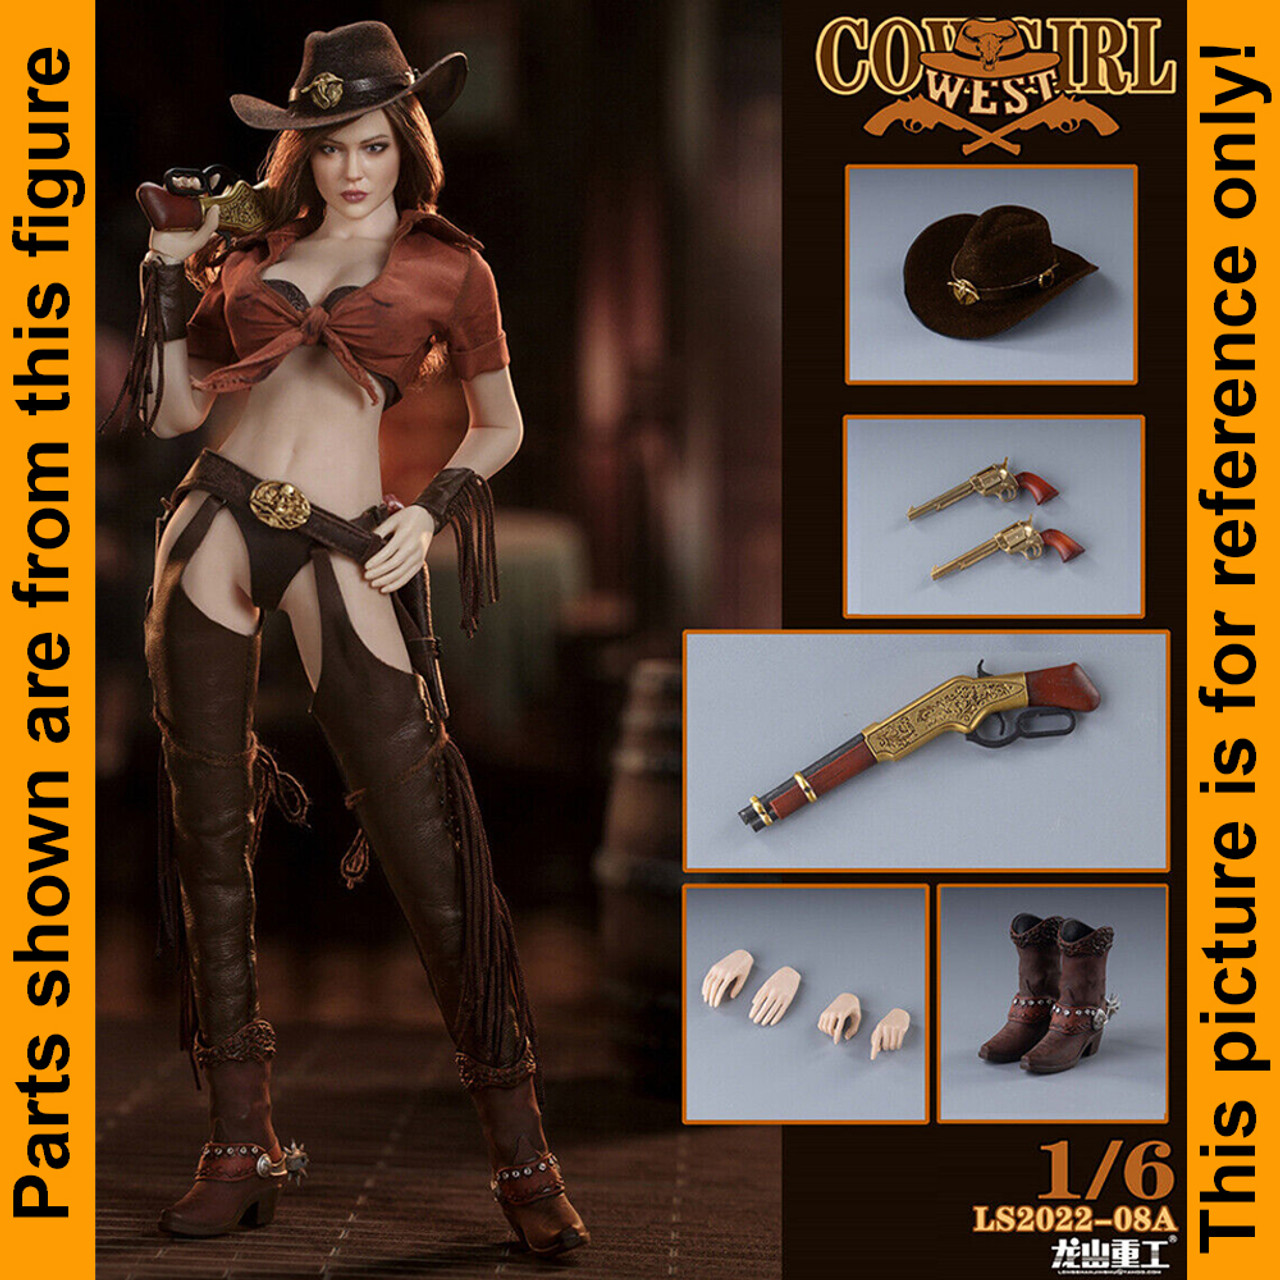 Western Cowgirl A - Leather G String Underwear - 1/6 Scale -